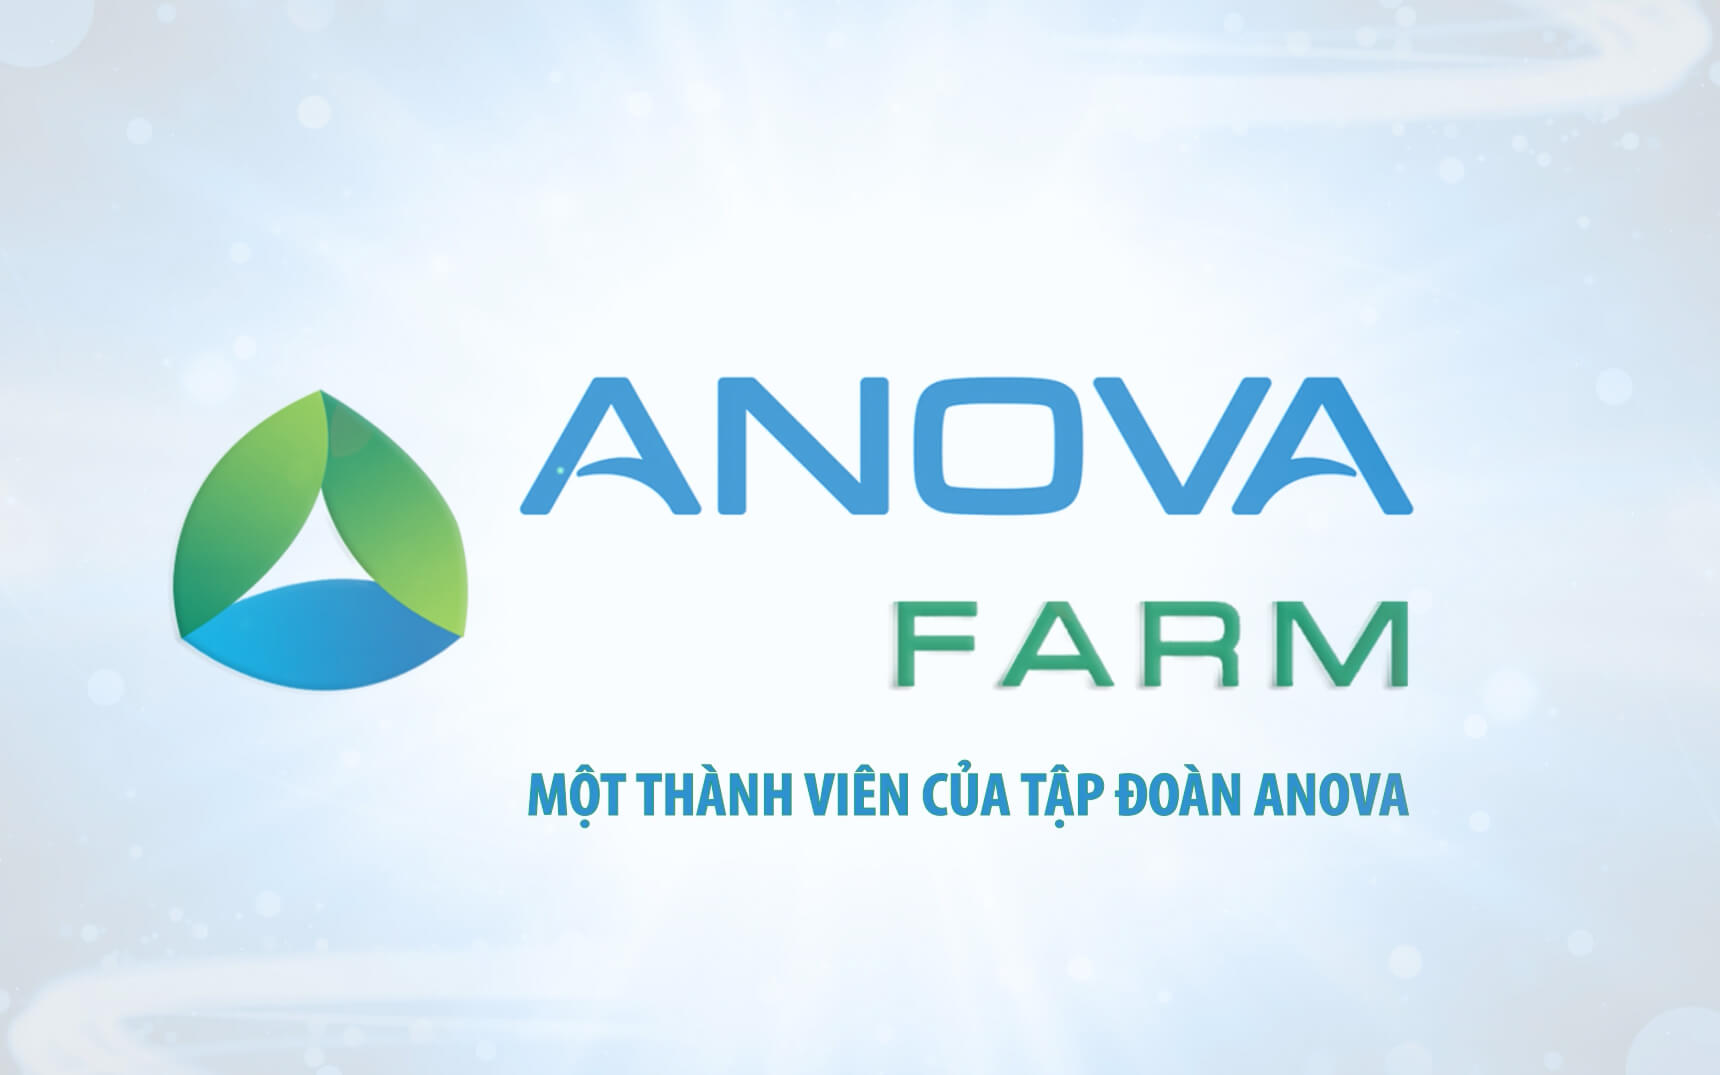 Video giới thiệu về Anova Farm